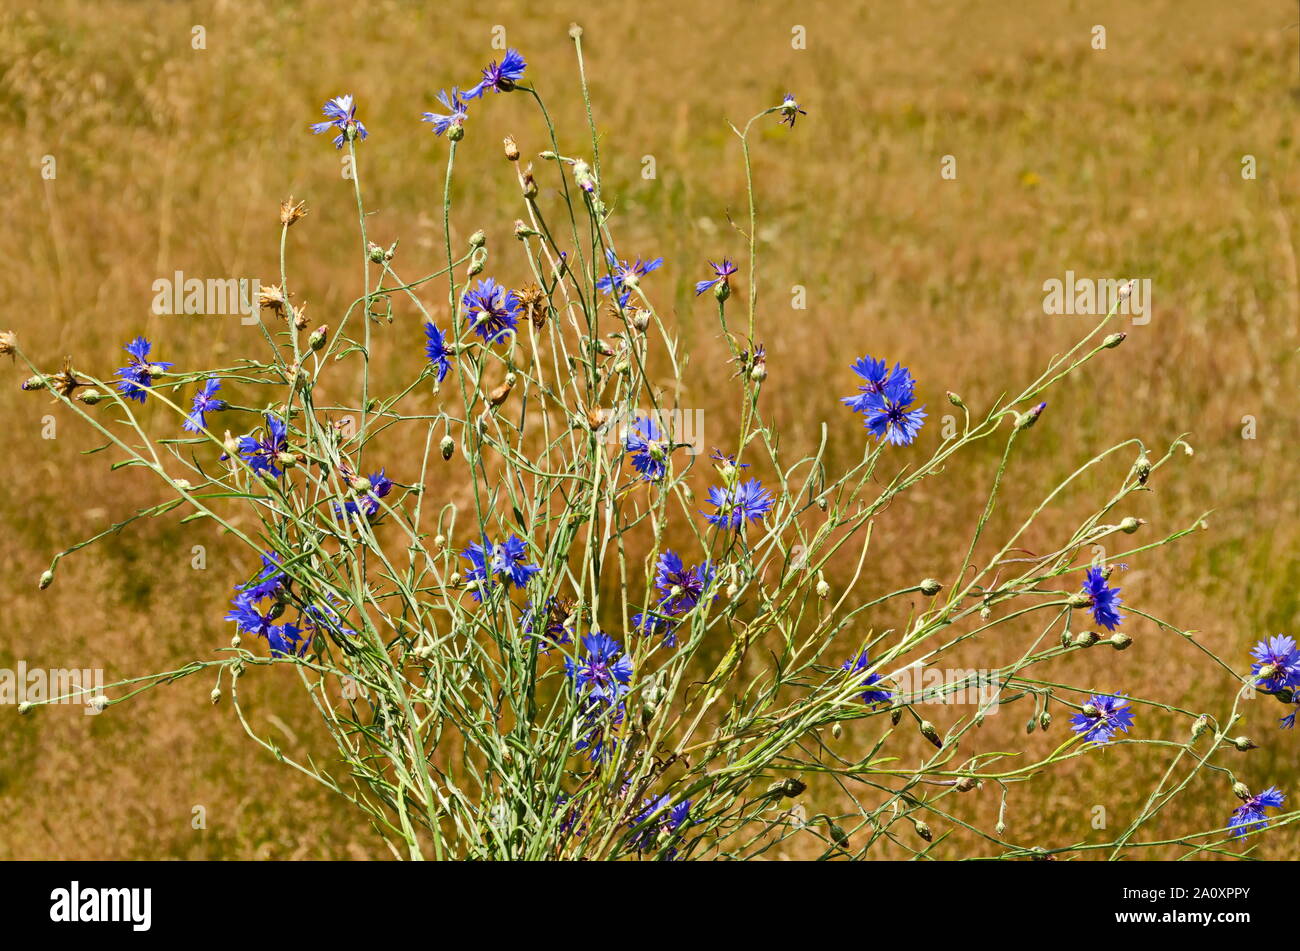 Bouquet of bluebottle,  cornflower or Centaurea cyanus wildflower on a dry grass background, Plana mountain, Bulgaria Stock Photo